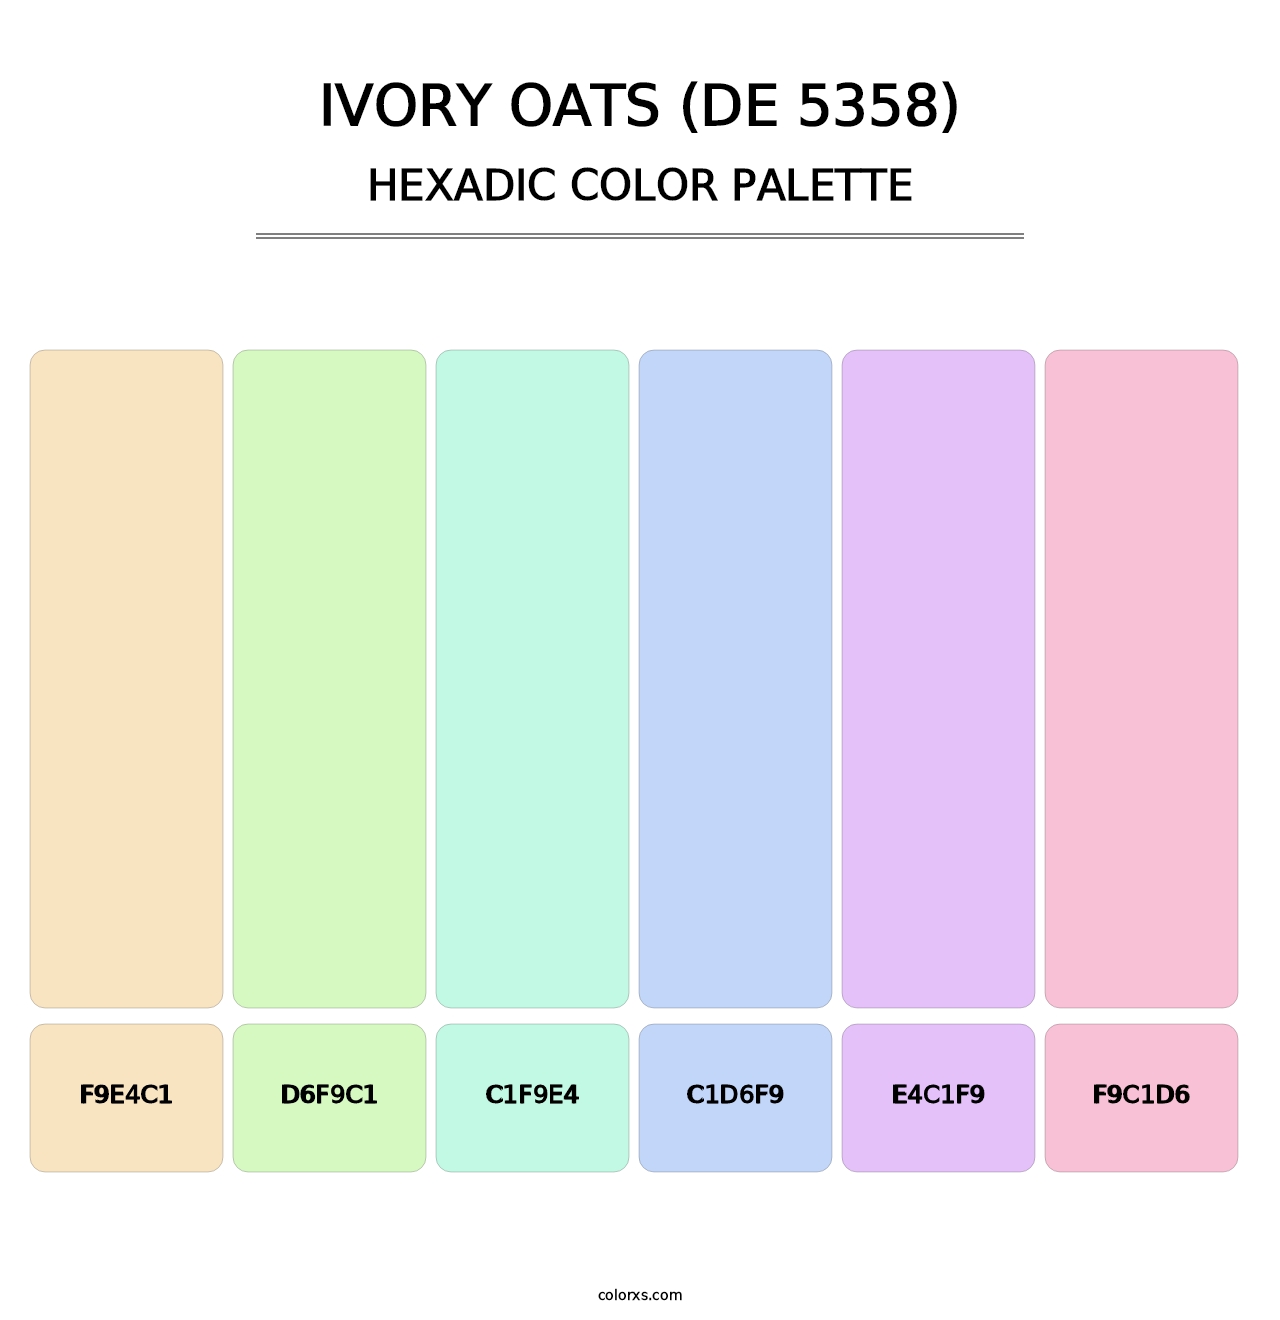 Ivory Oats (DE 5358) - Hexadic Color Palette